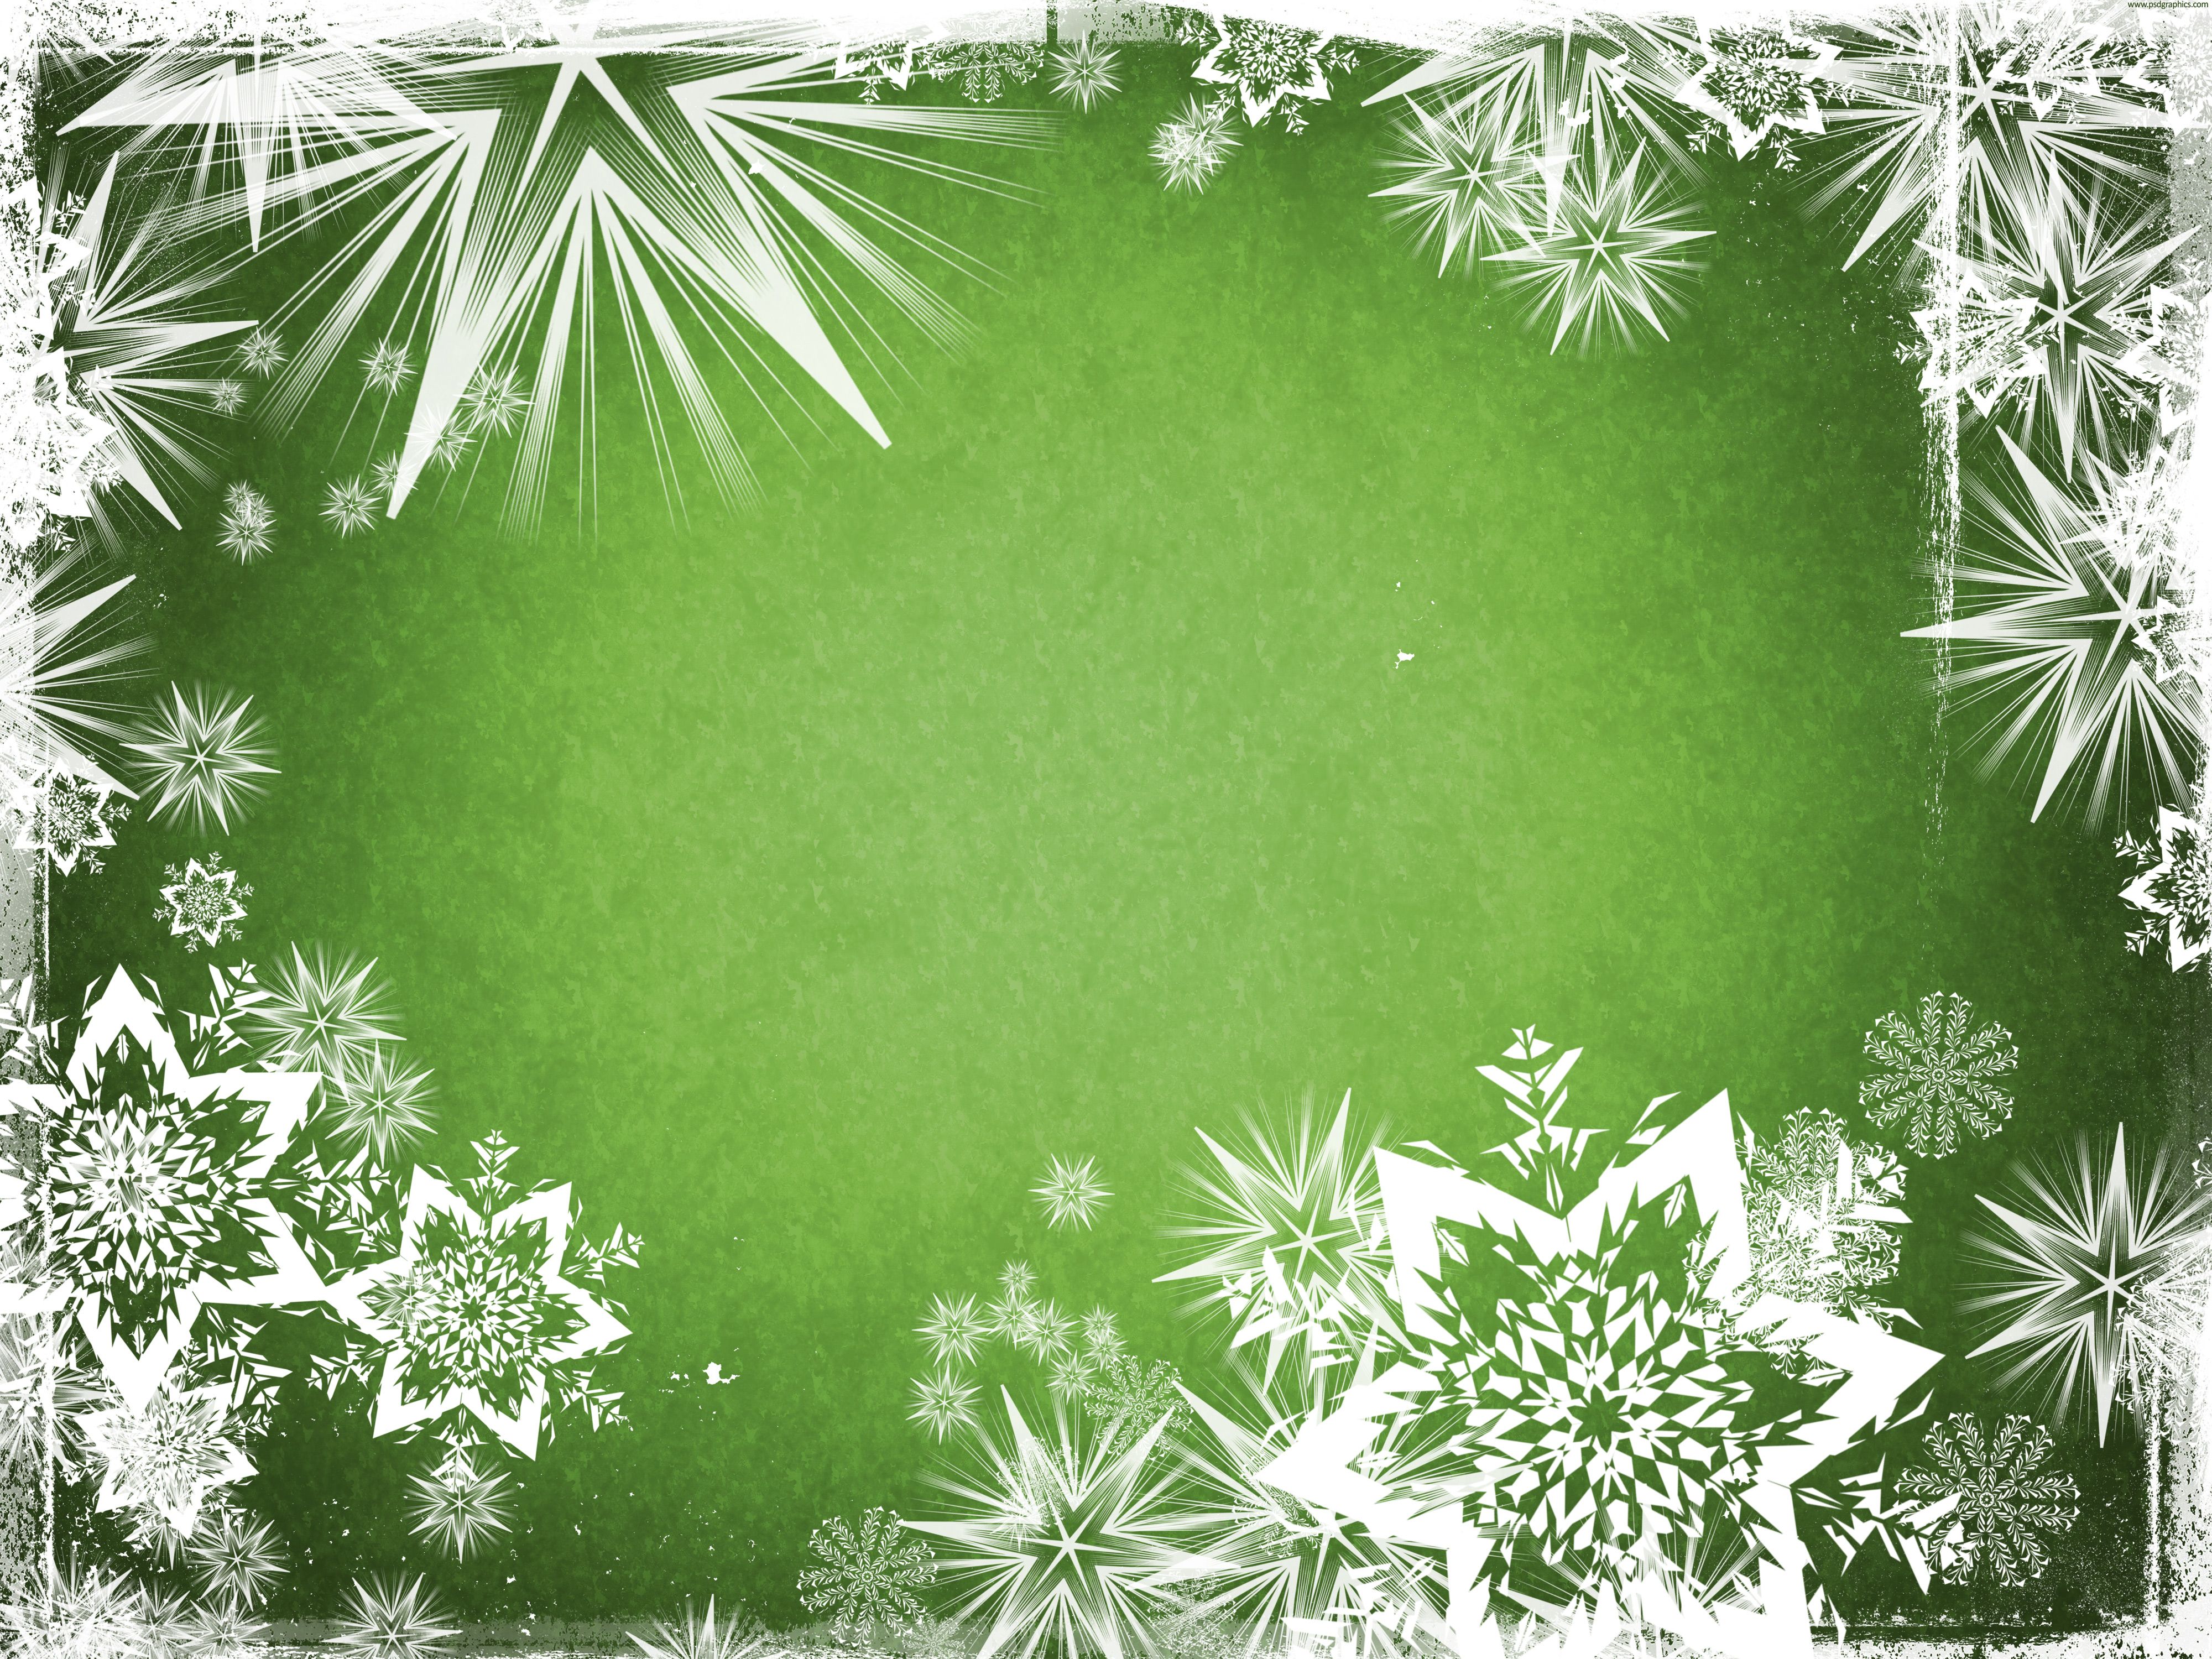 Xmas card ideas on Pinterest | Christmas Background, Backgrounds ...